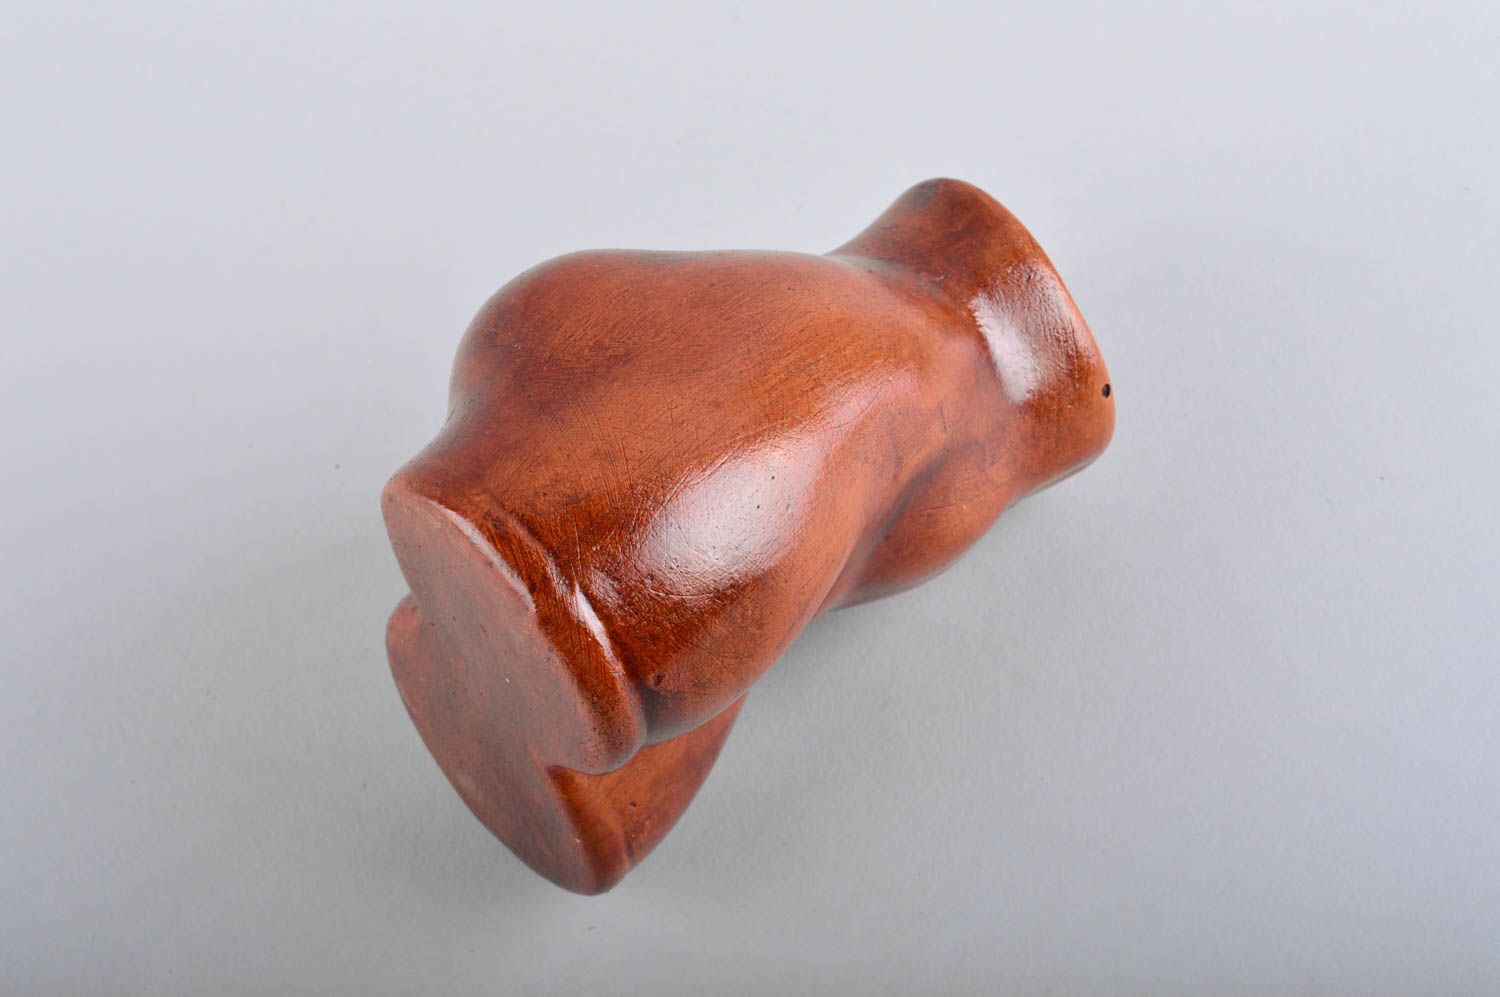 15 oz ceramic brown clay vase jug 4 inches tall 0,81 lb photo 5